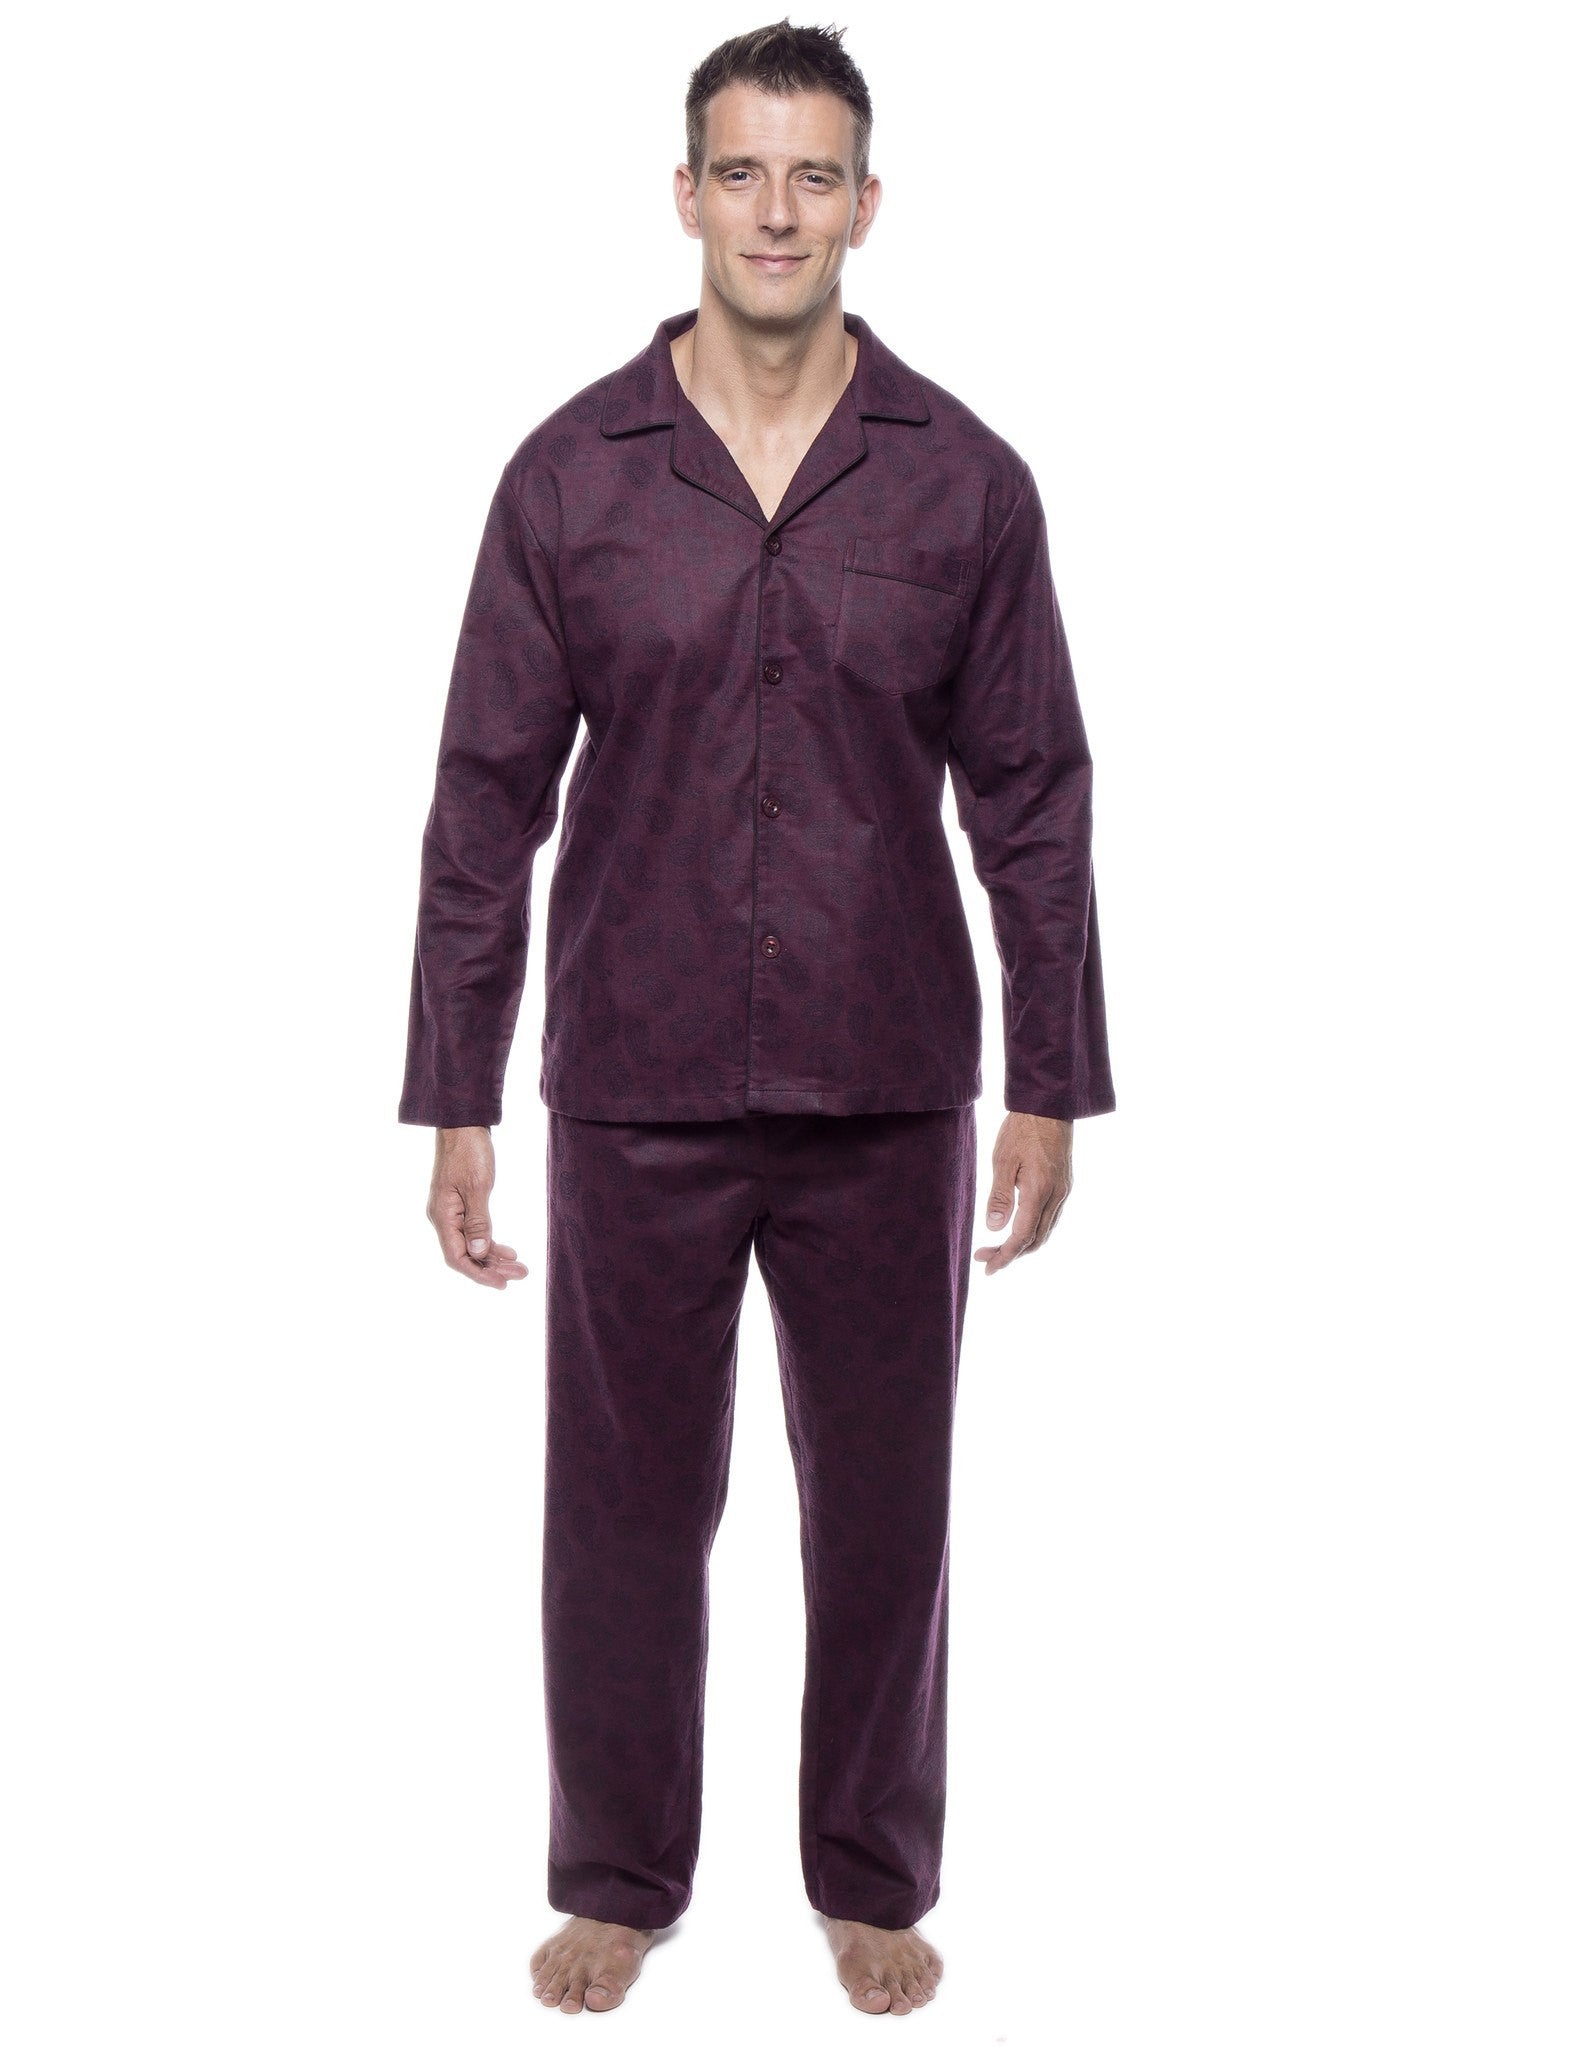 Men's 100% Cotton Flannel Pajama Set